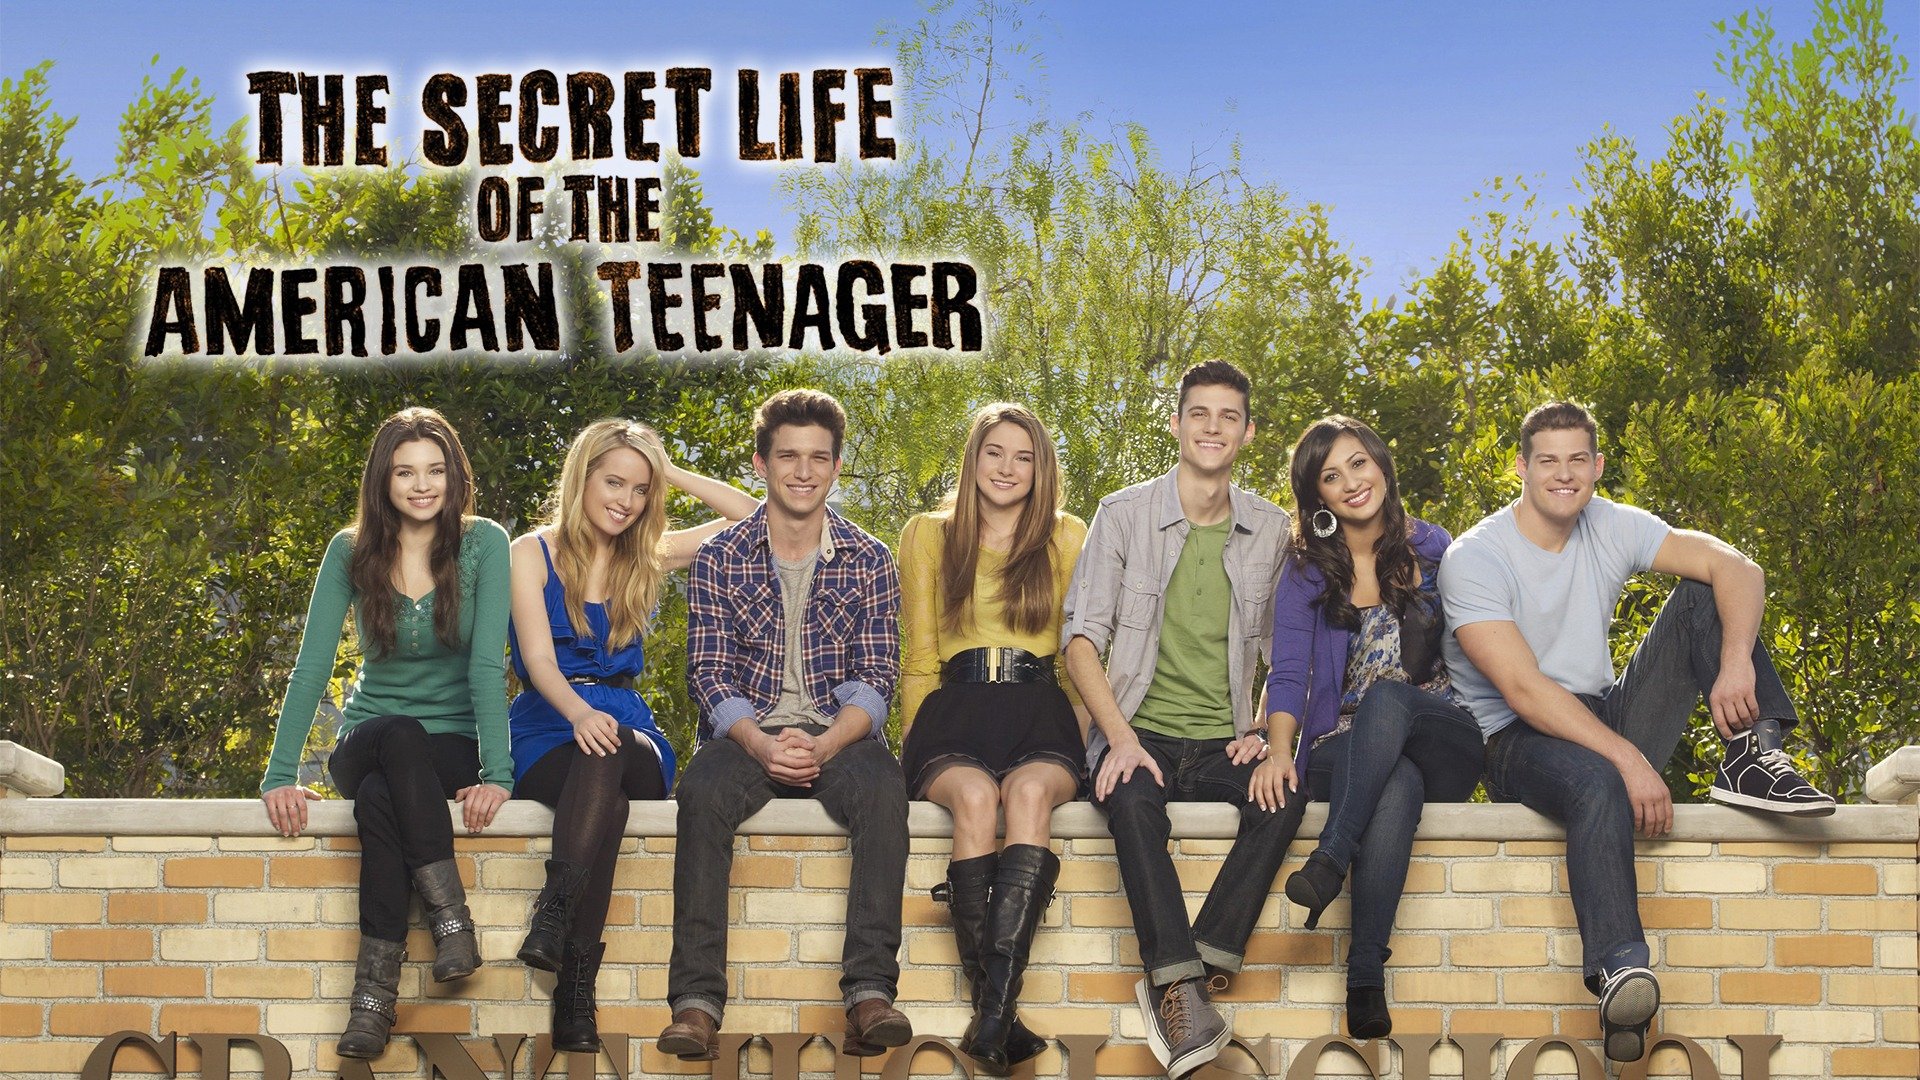 The teenager s world. The Secret Life of the American teenager. Меган парк. Тинейджер шоу 1993. American teenagers.